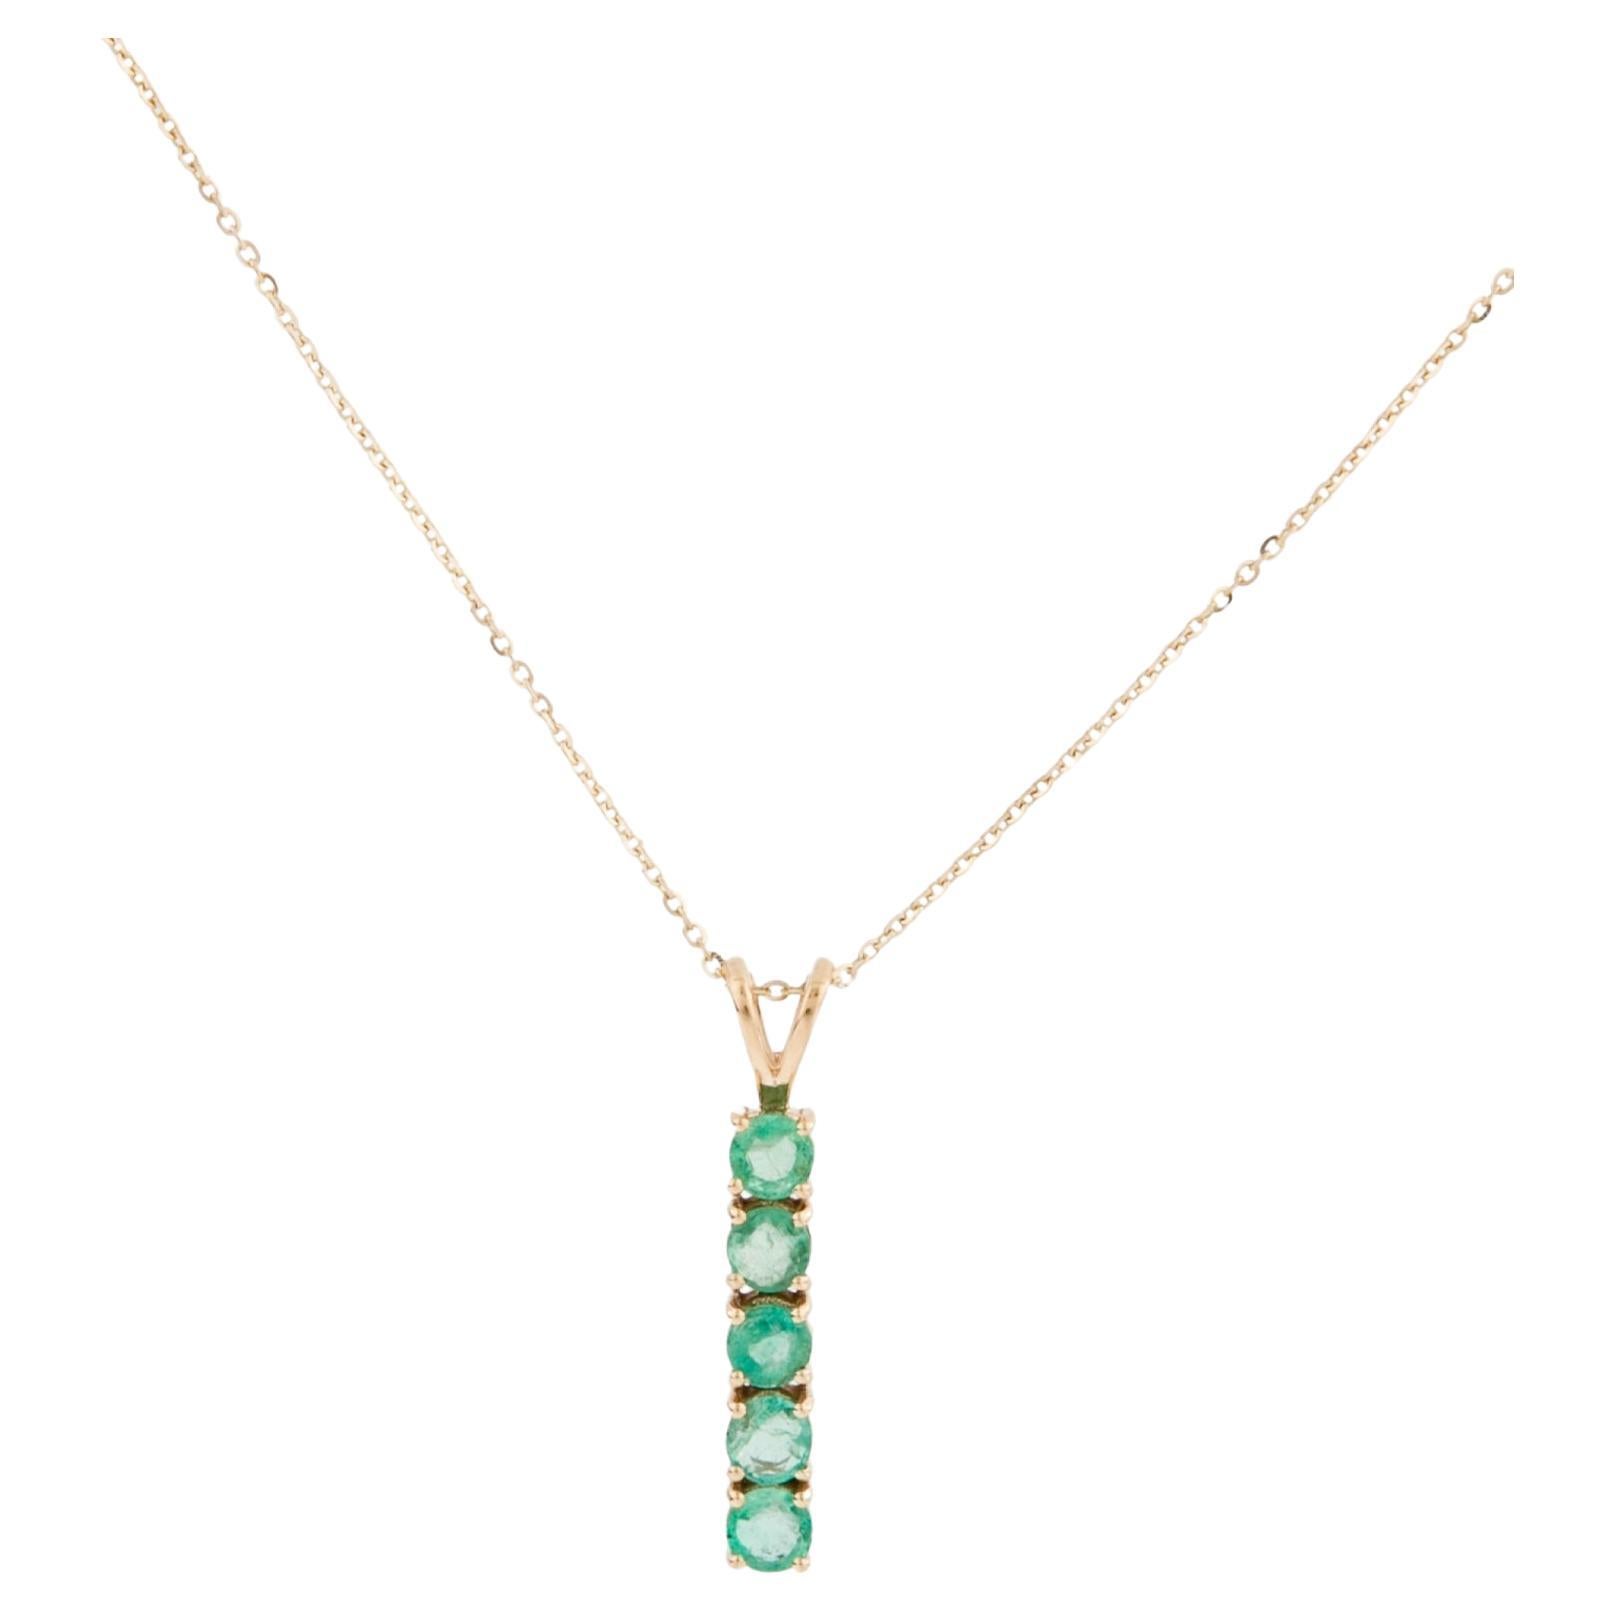 Elegant 14K Emerald Pendant Necklace: Exquisite Luxury Statement Jewelry Piece For Sale